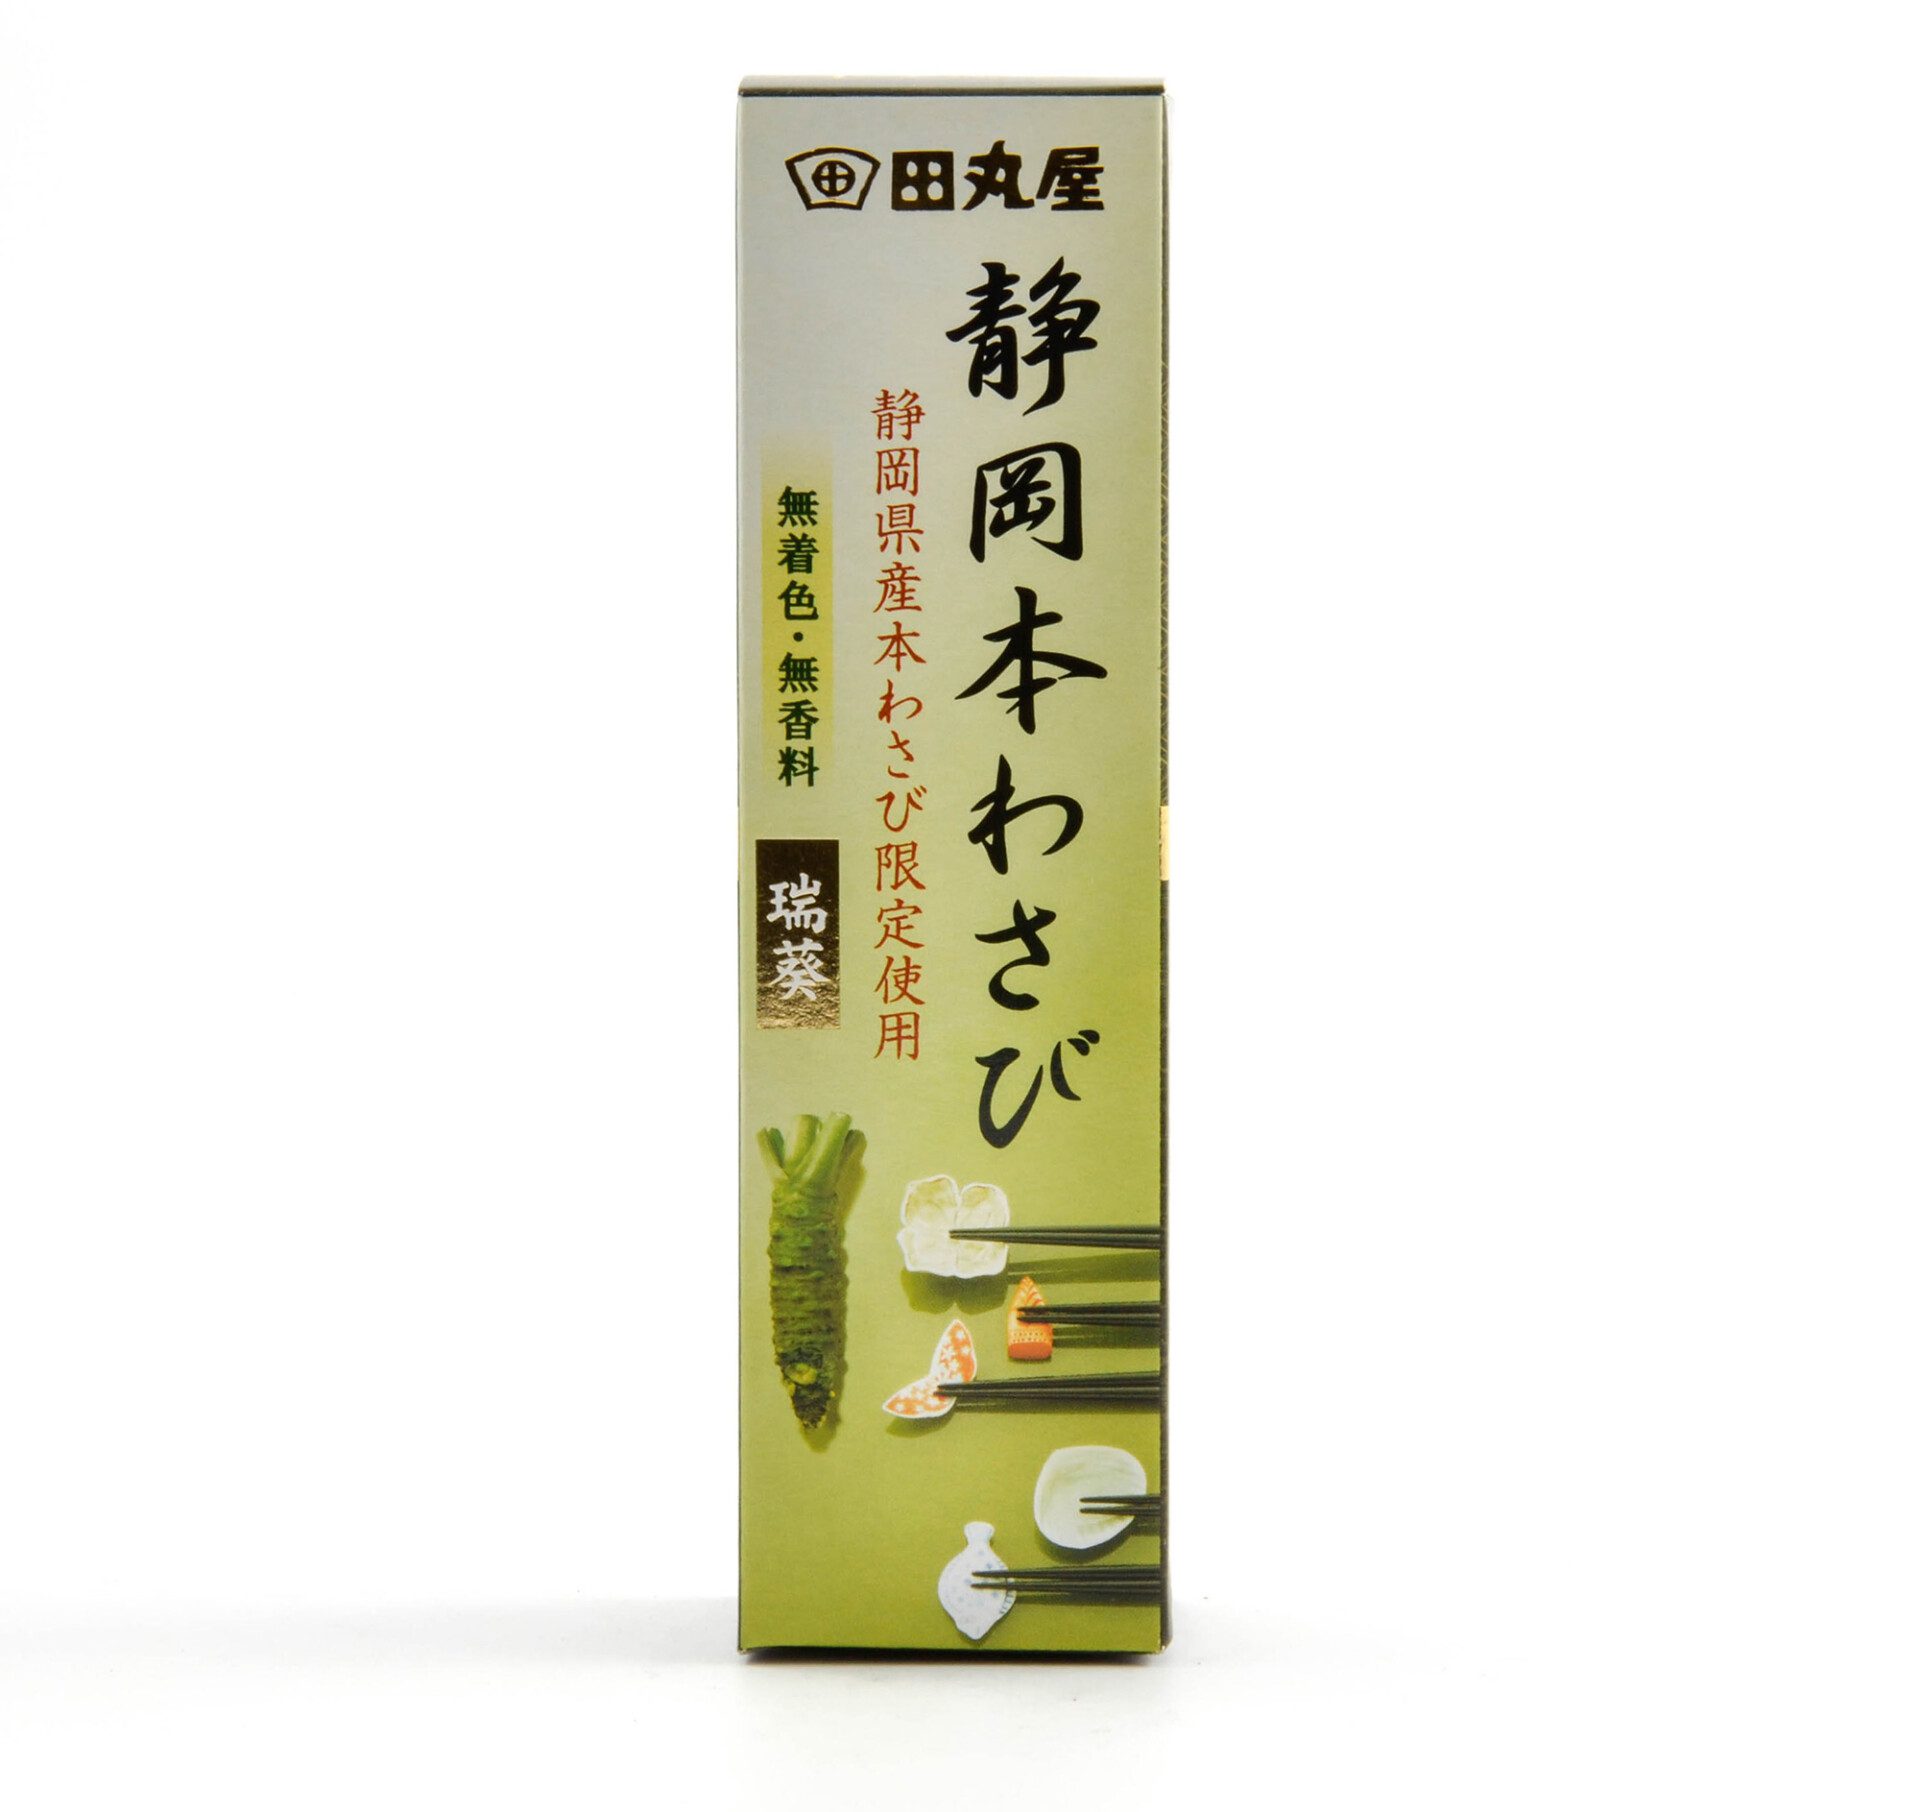 Wasabi en tube, L'Univers Japon